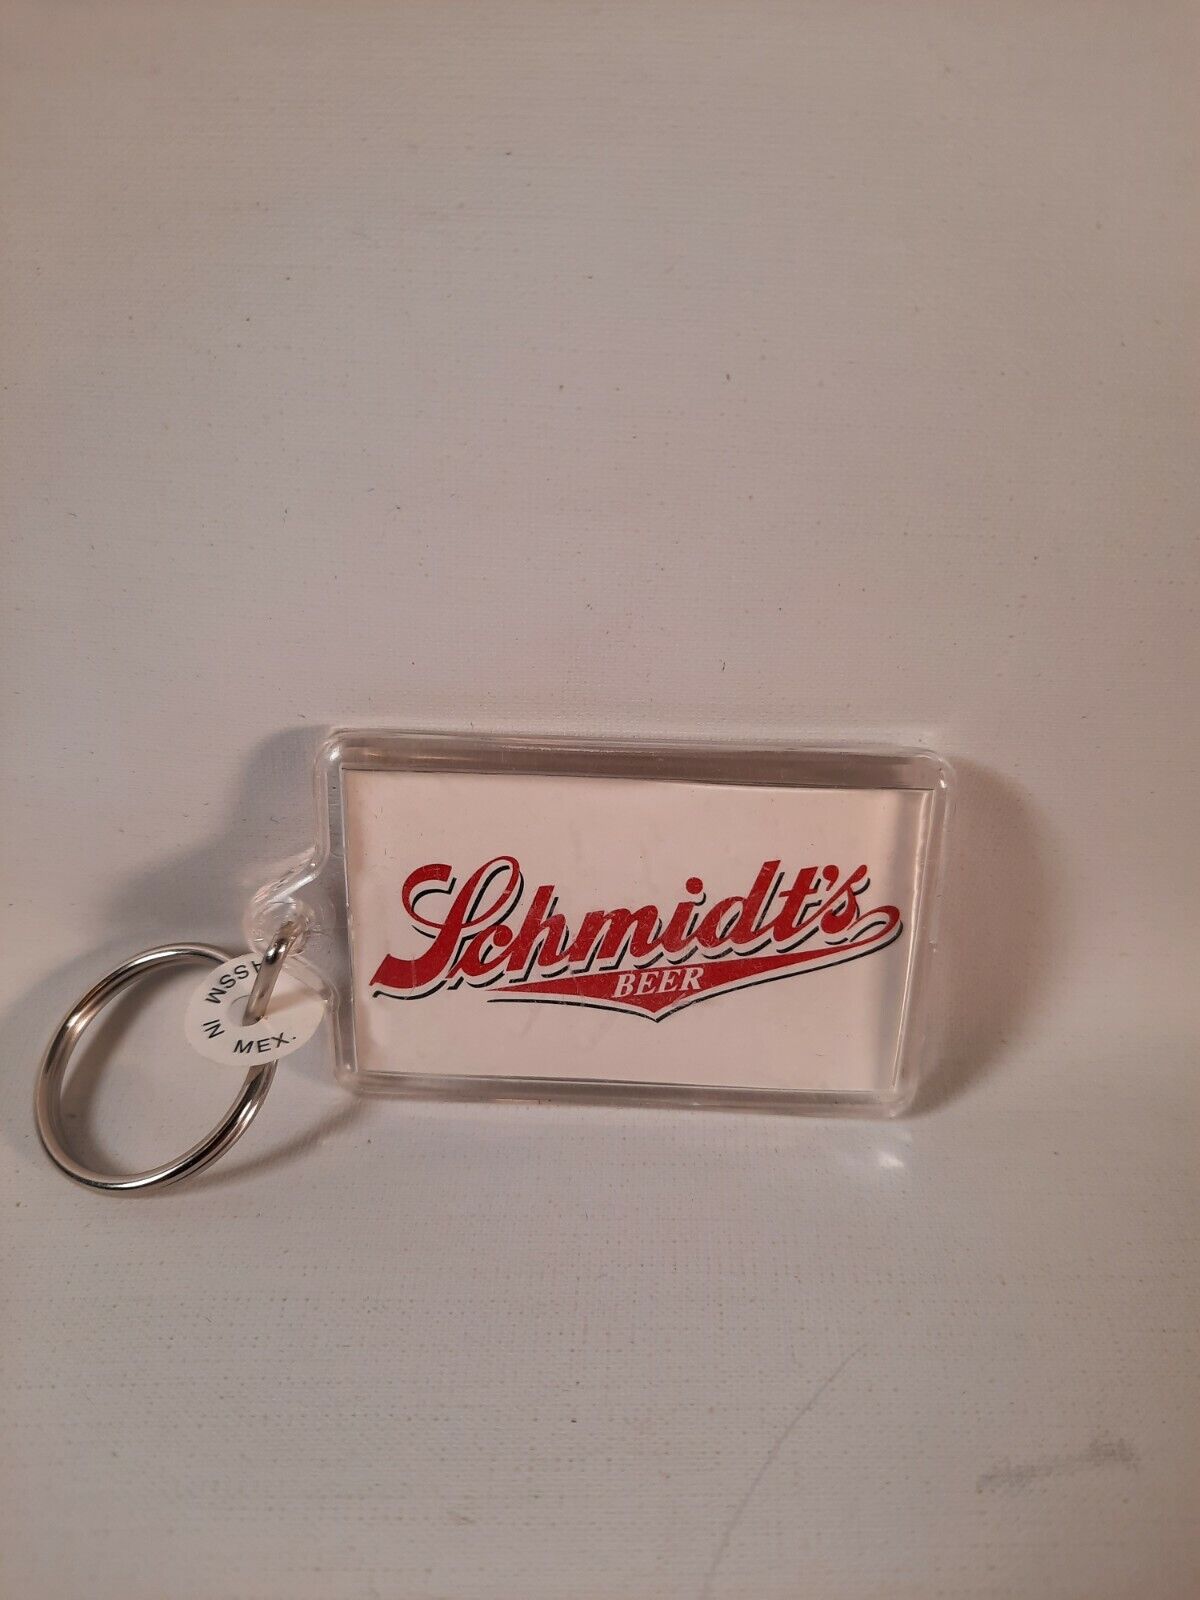 Vintage Schmidt’s Beer Clear Plastic Logo Keychain Key Ring Rare